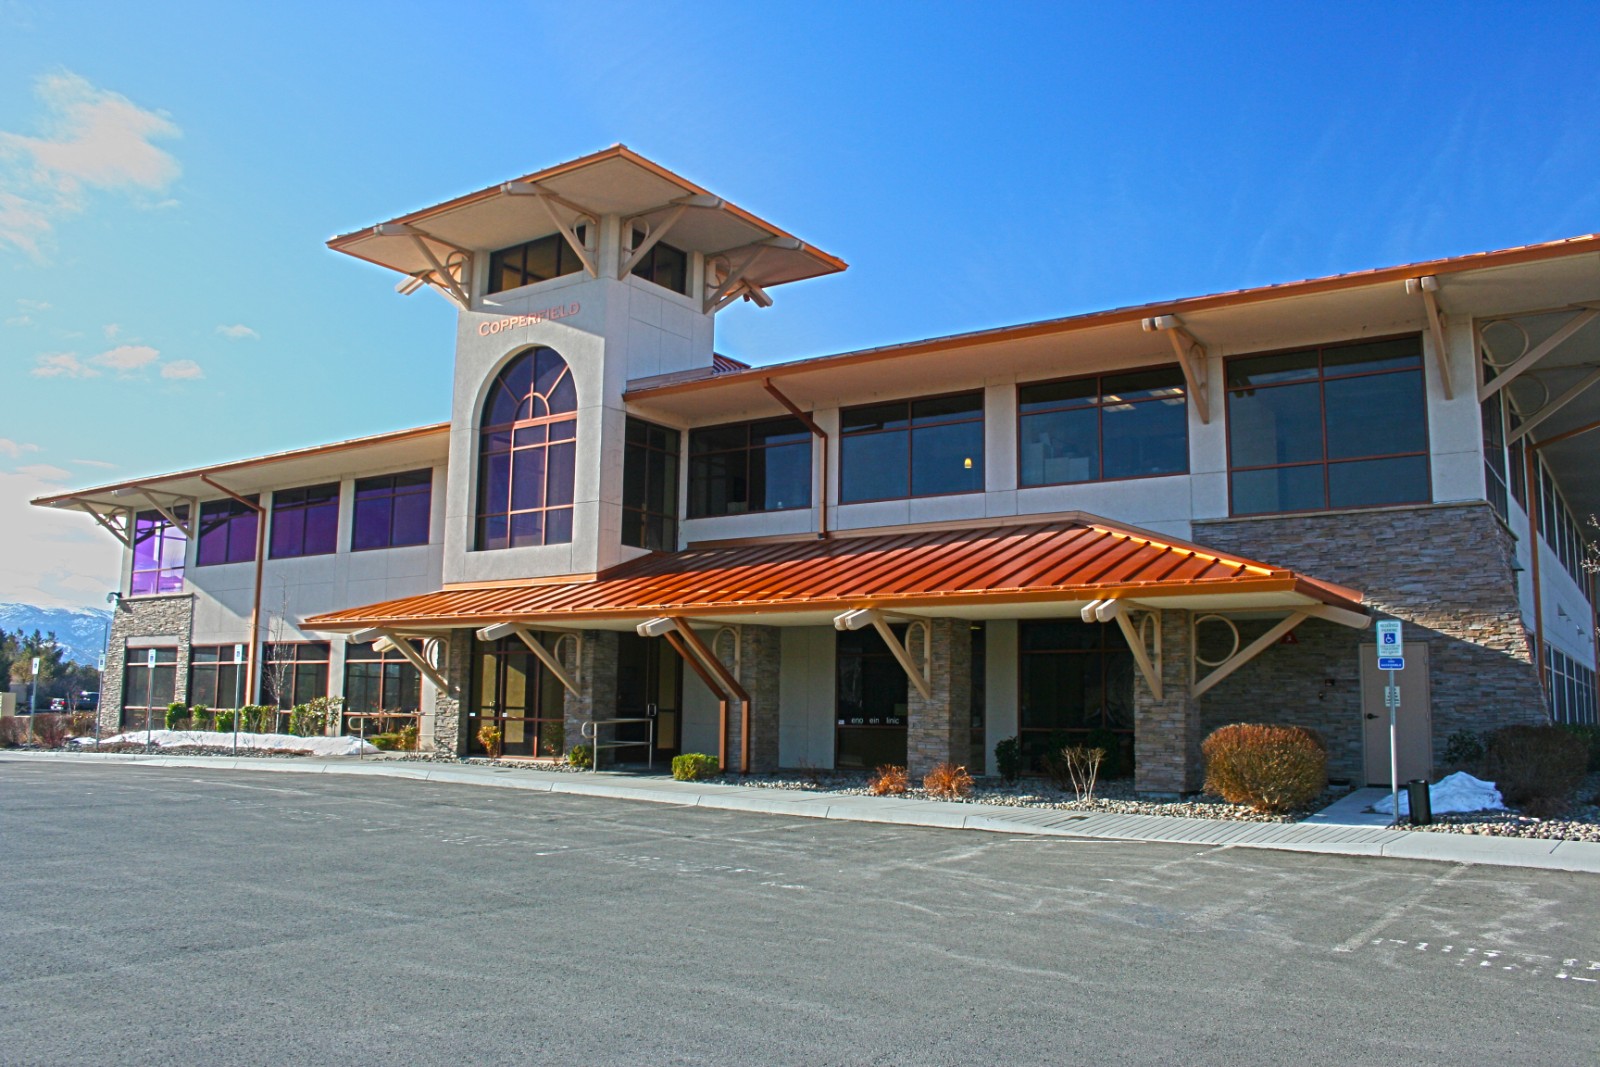 Copperfield Medical Building Reno